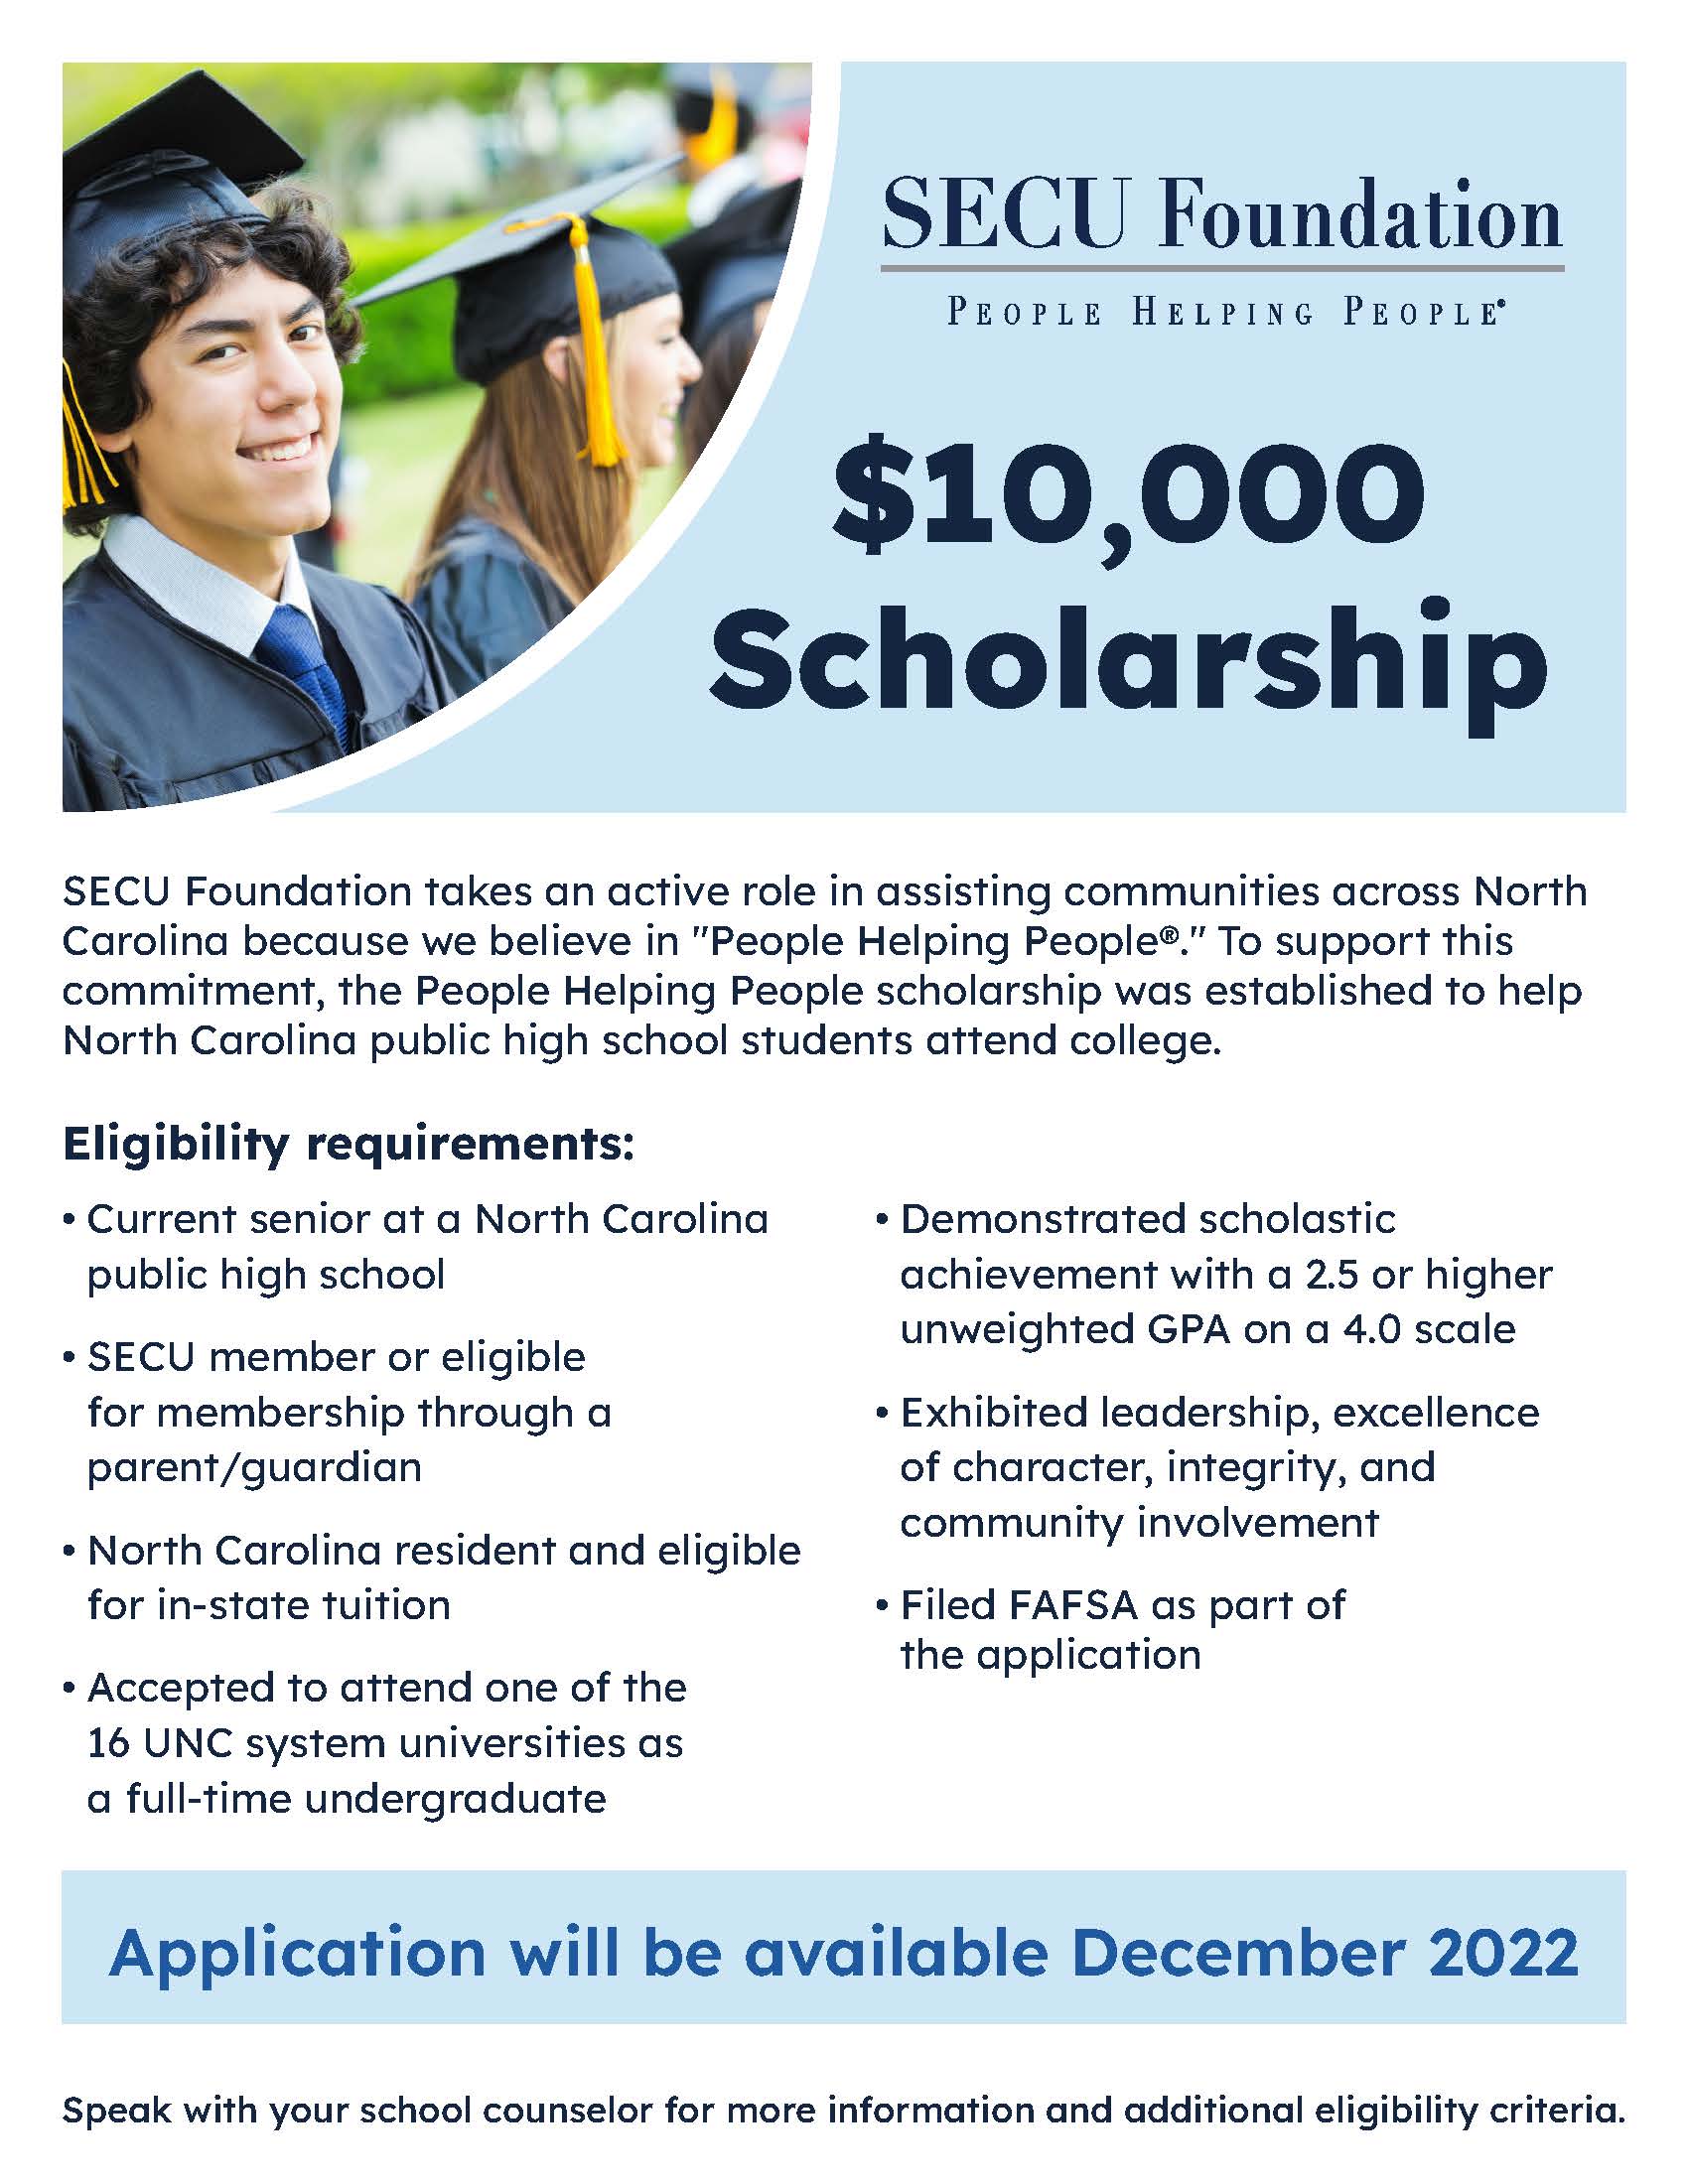 SECU Scholarship Program Announcement